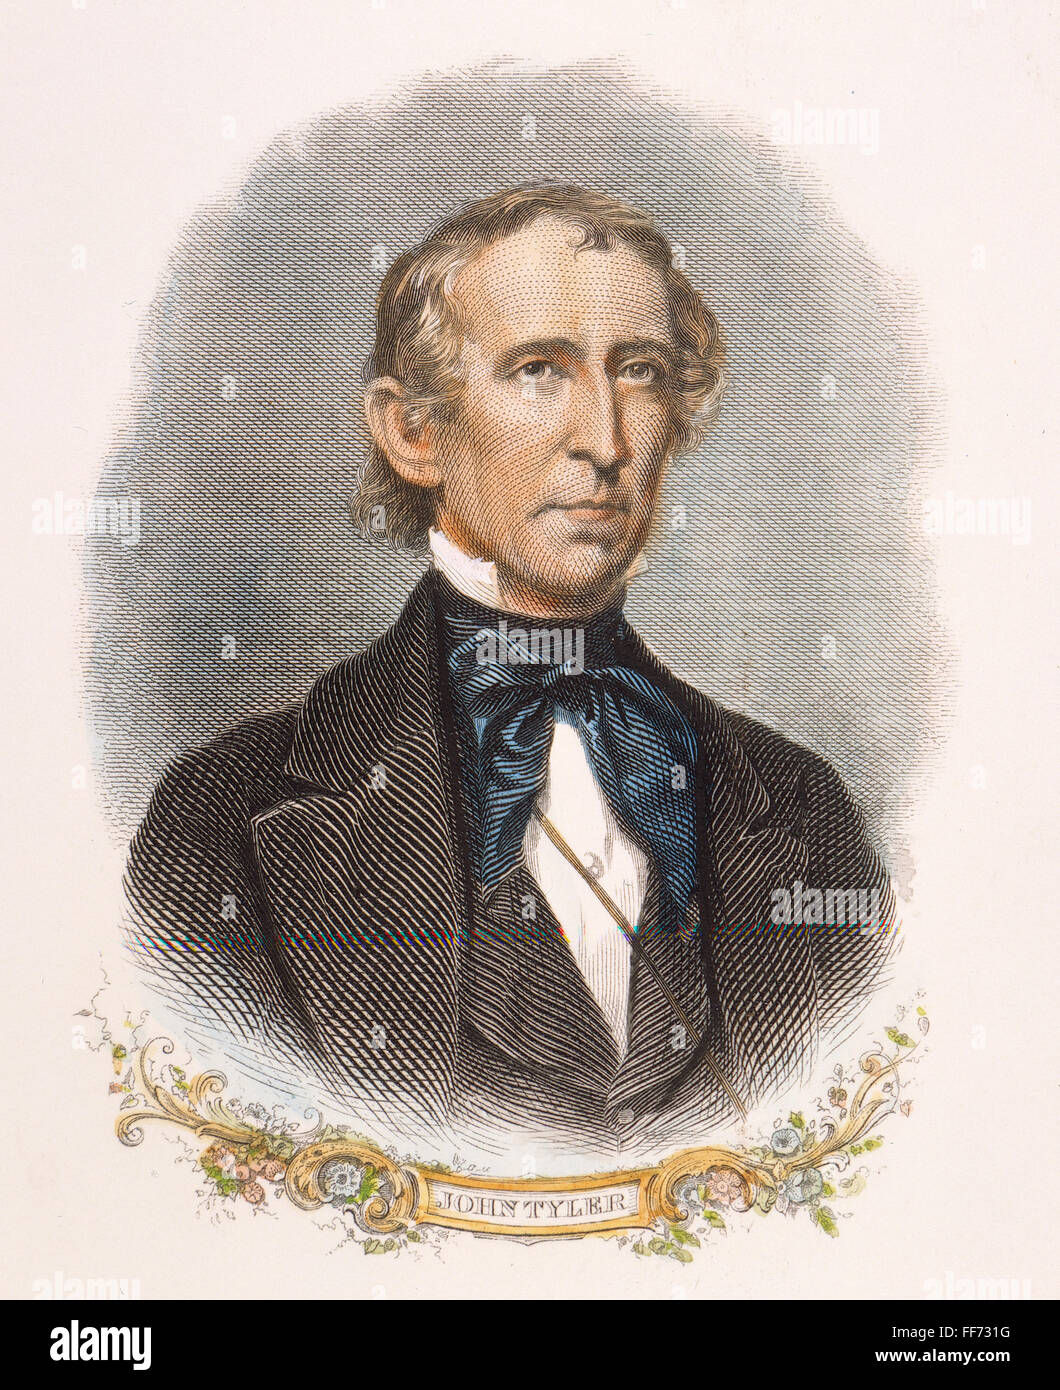 JOHN TYLER (1790-1862): /nengraving, 19th century. Stock Photo